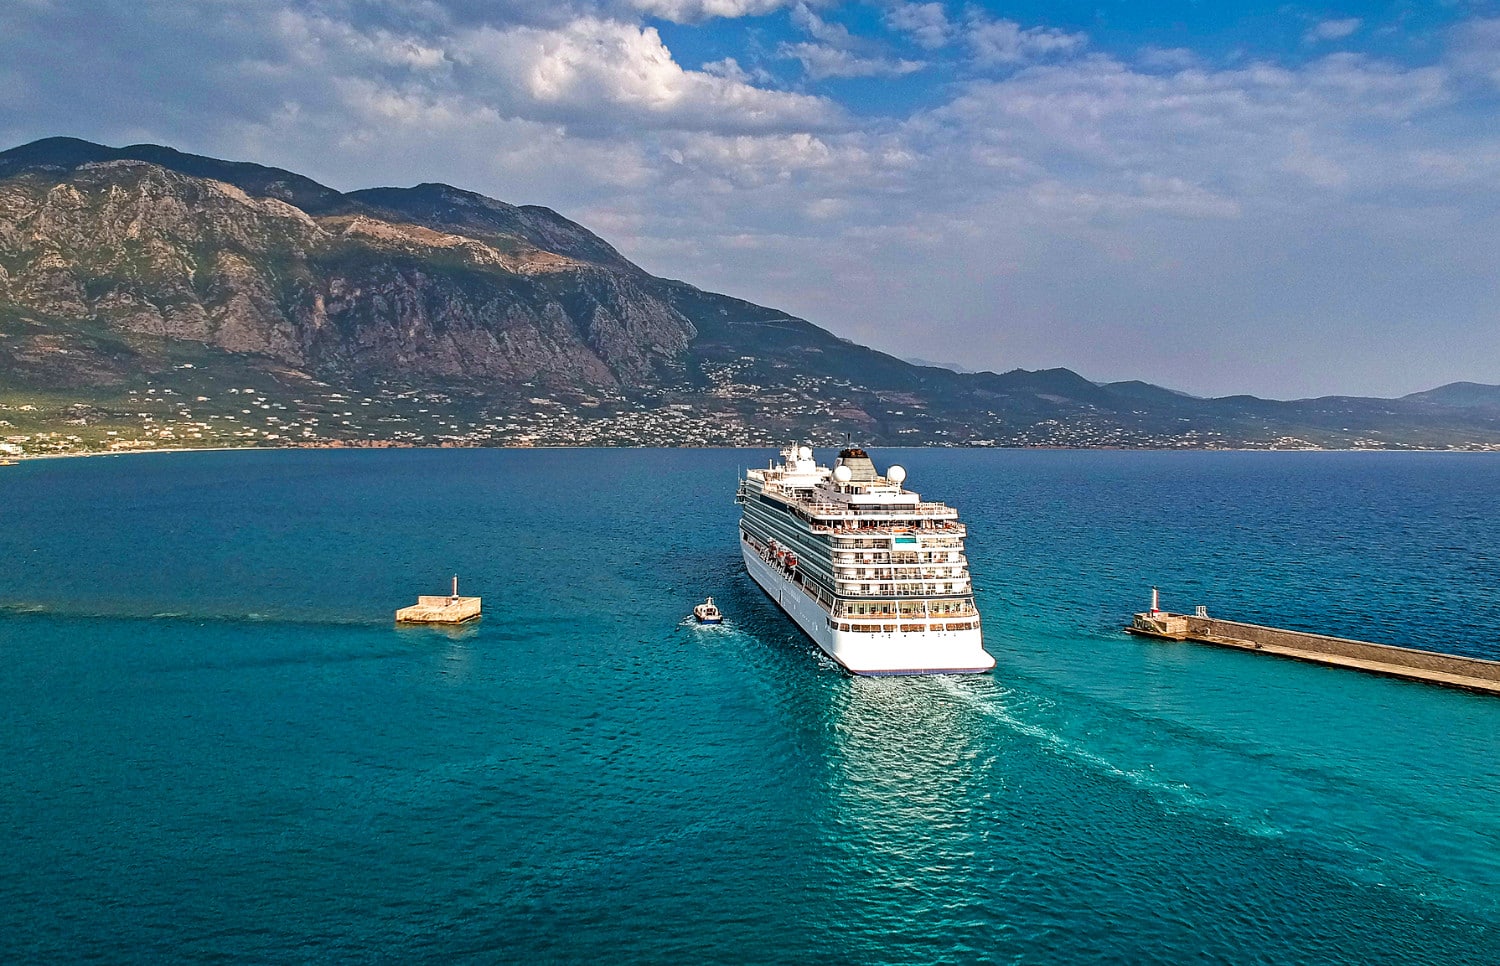 Viking ocean cruise ship in Meditereanean